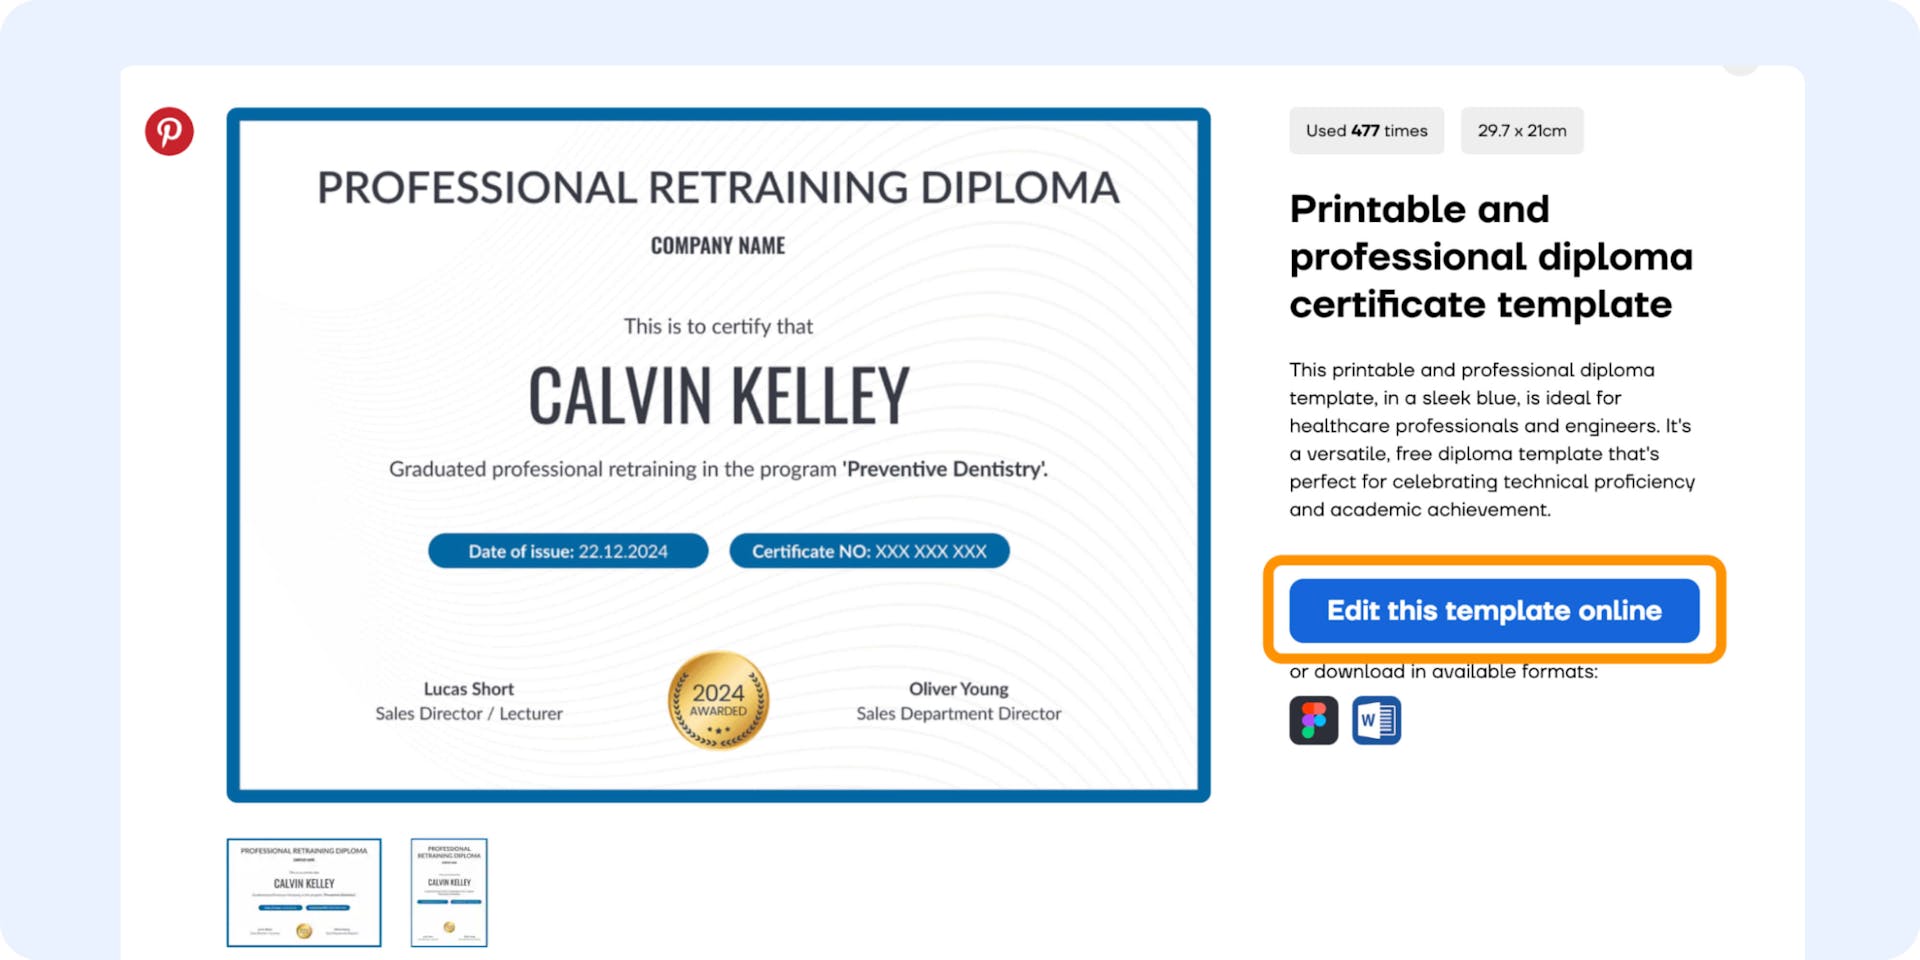 Choosing the printable certificate design.